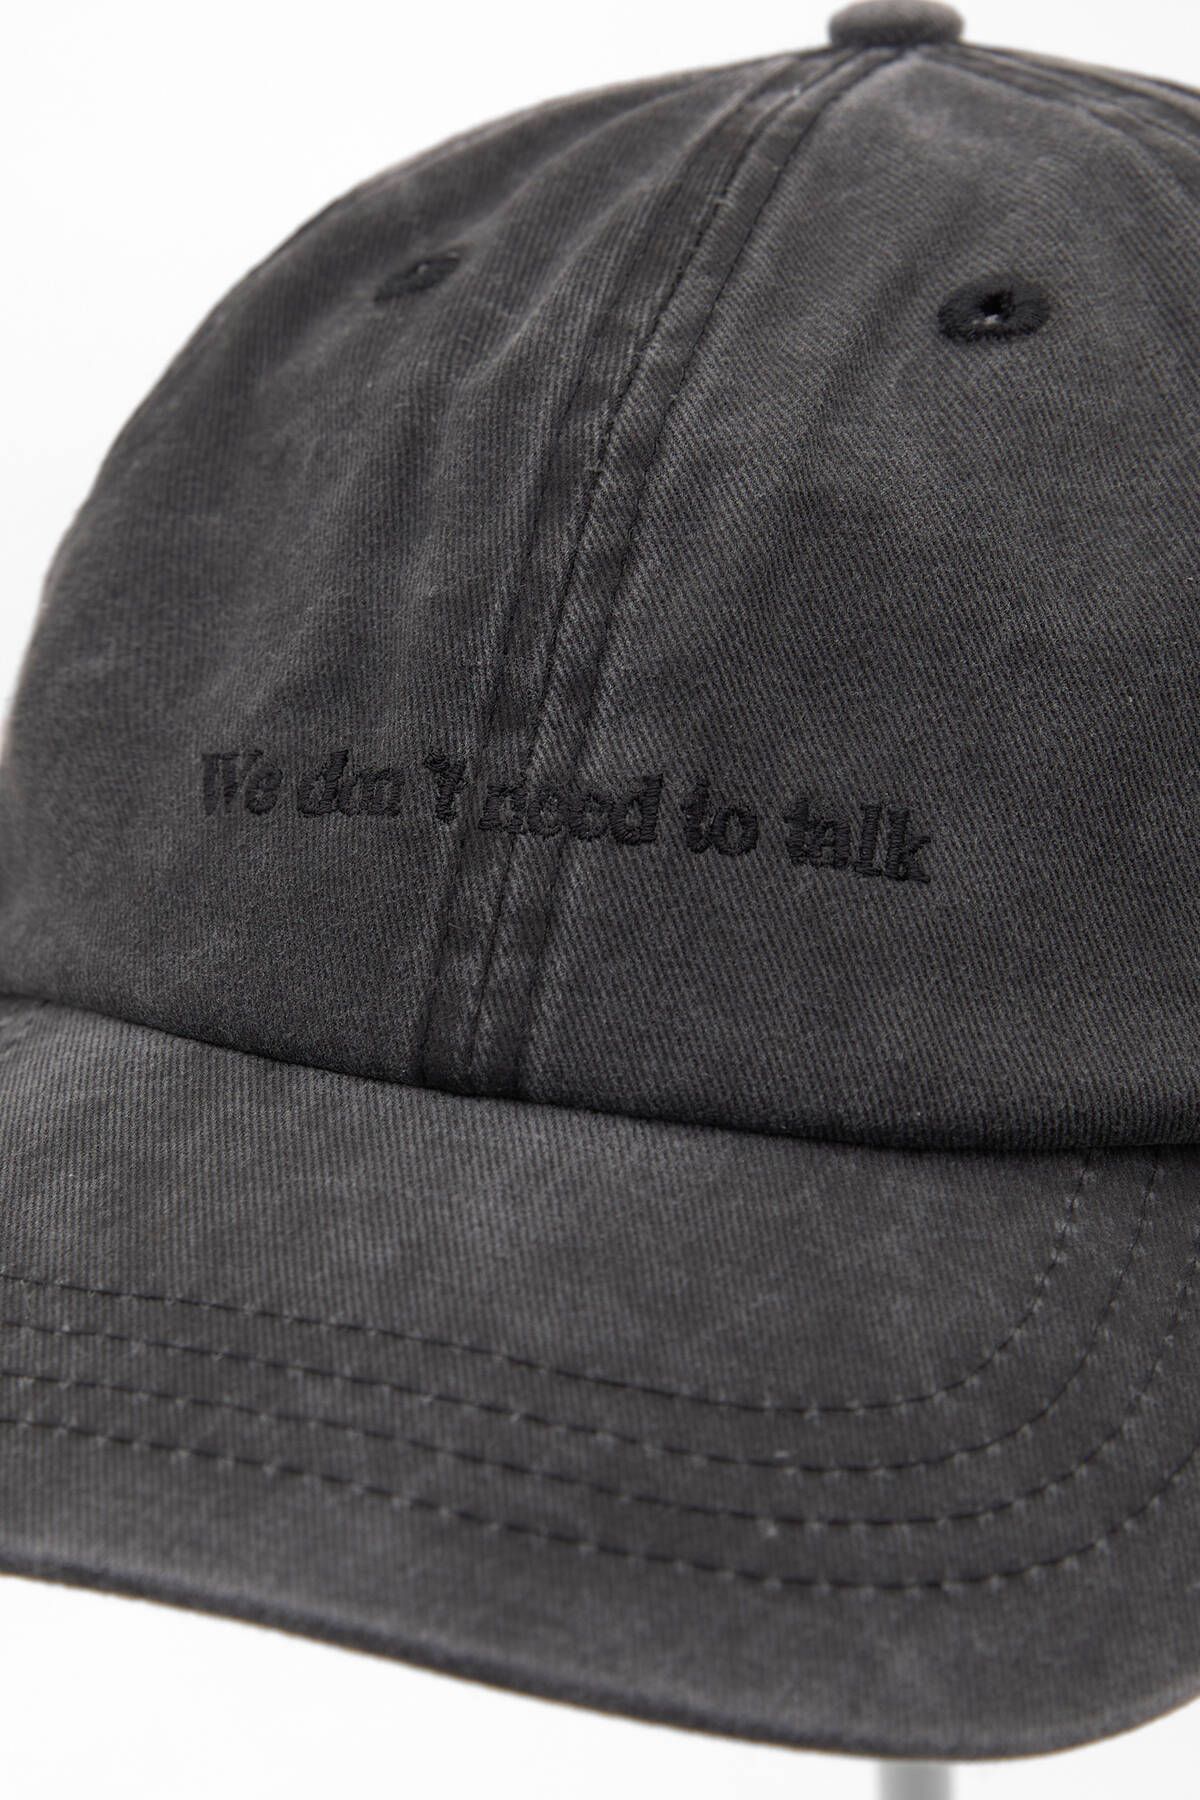 Pull & Bear کلاه سیاه با رنگ پریده و گلدوزی شده